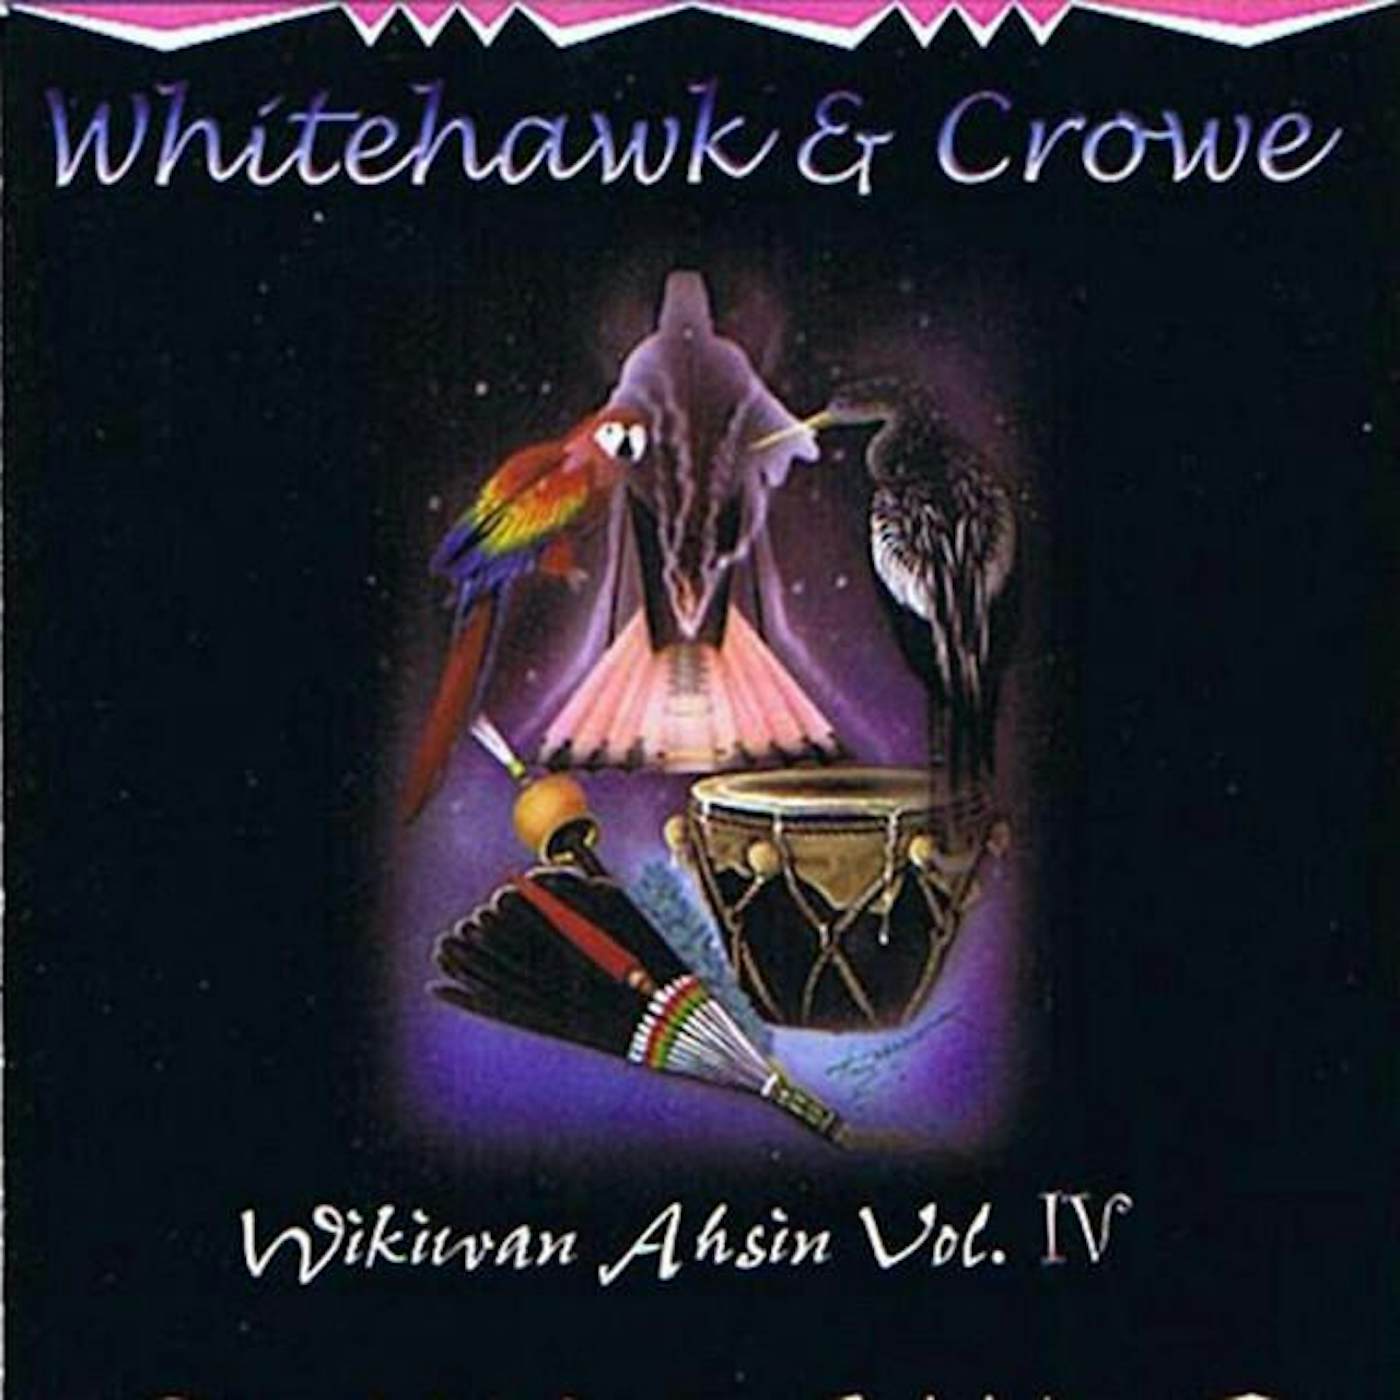 Whitehawk & Crowe